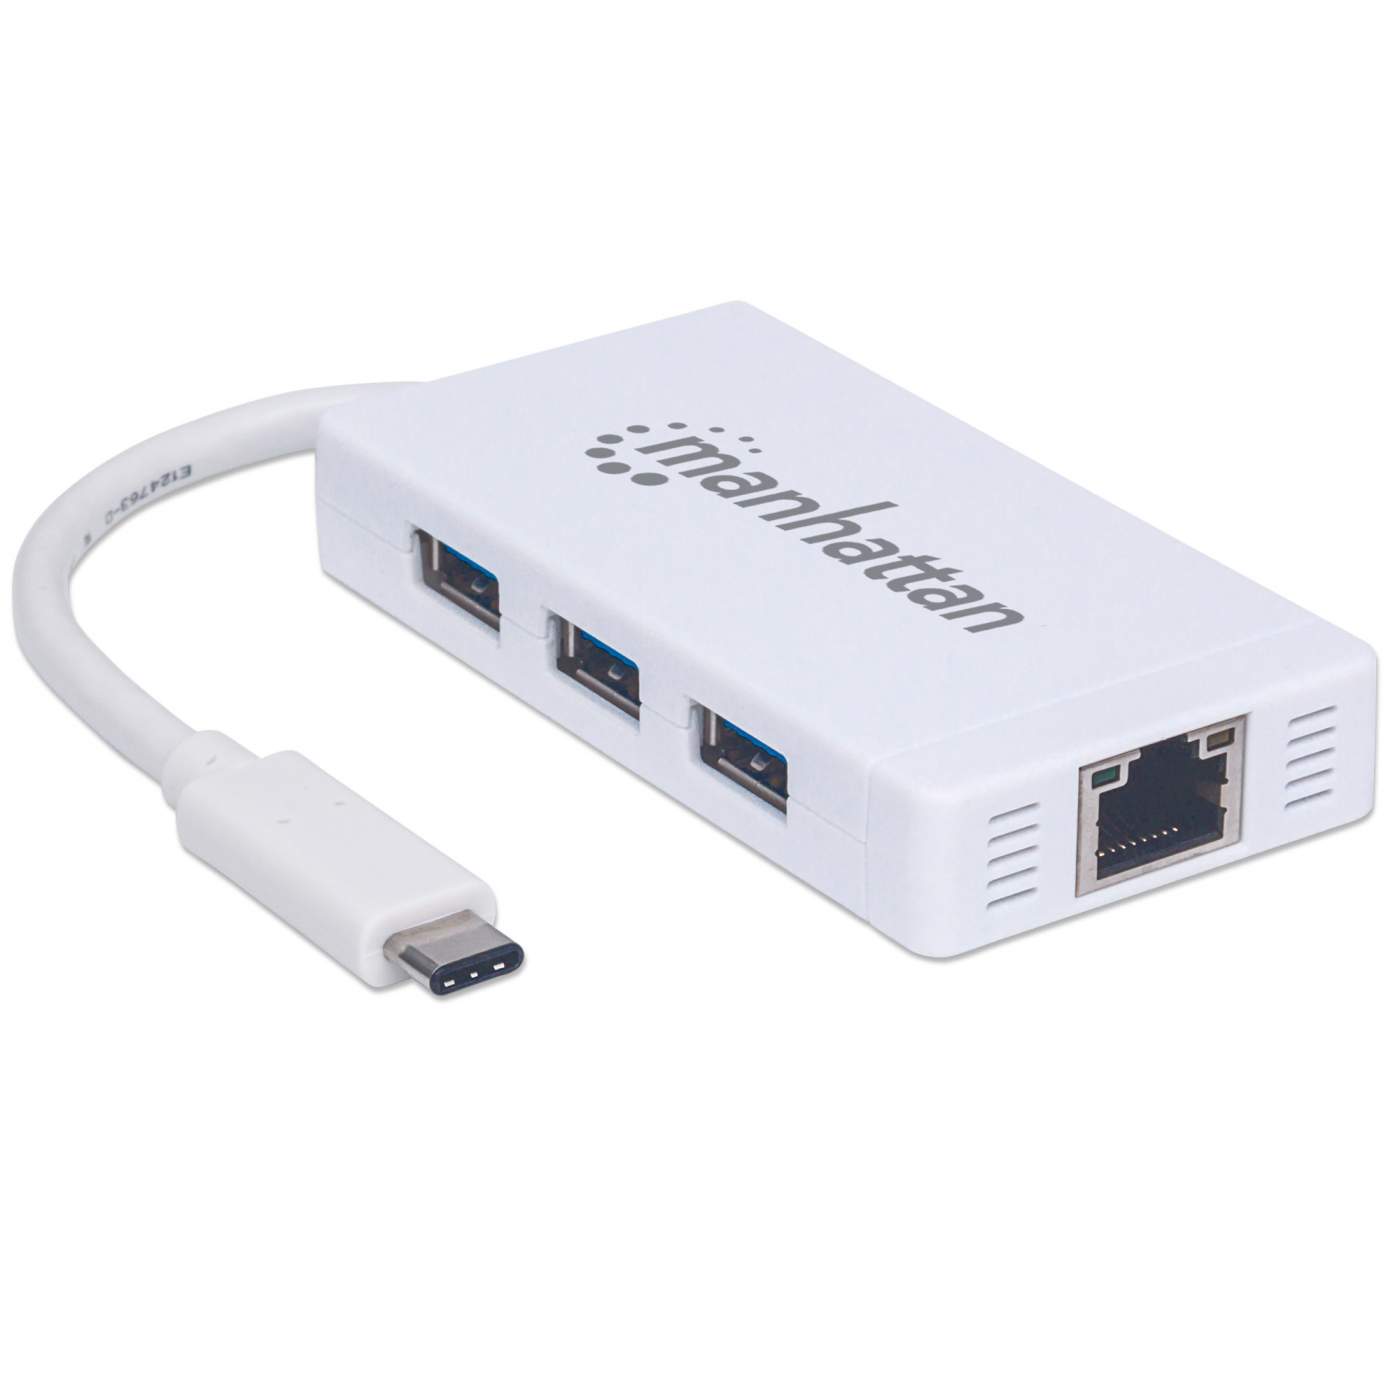 Forblive tvetydig Statistisk Type-C to 3-Port USB 3.0 Hub w/ GbE Network Adapter